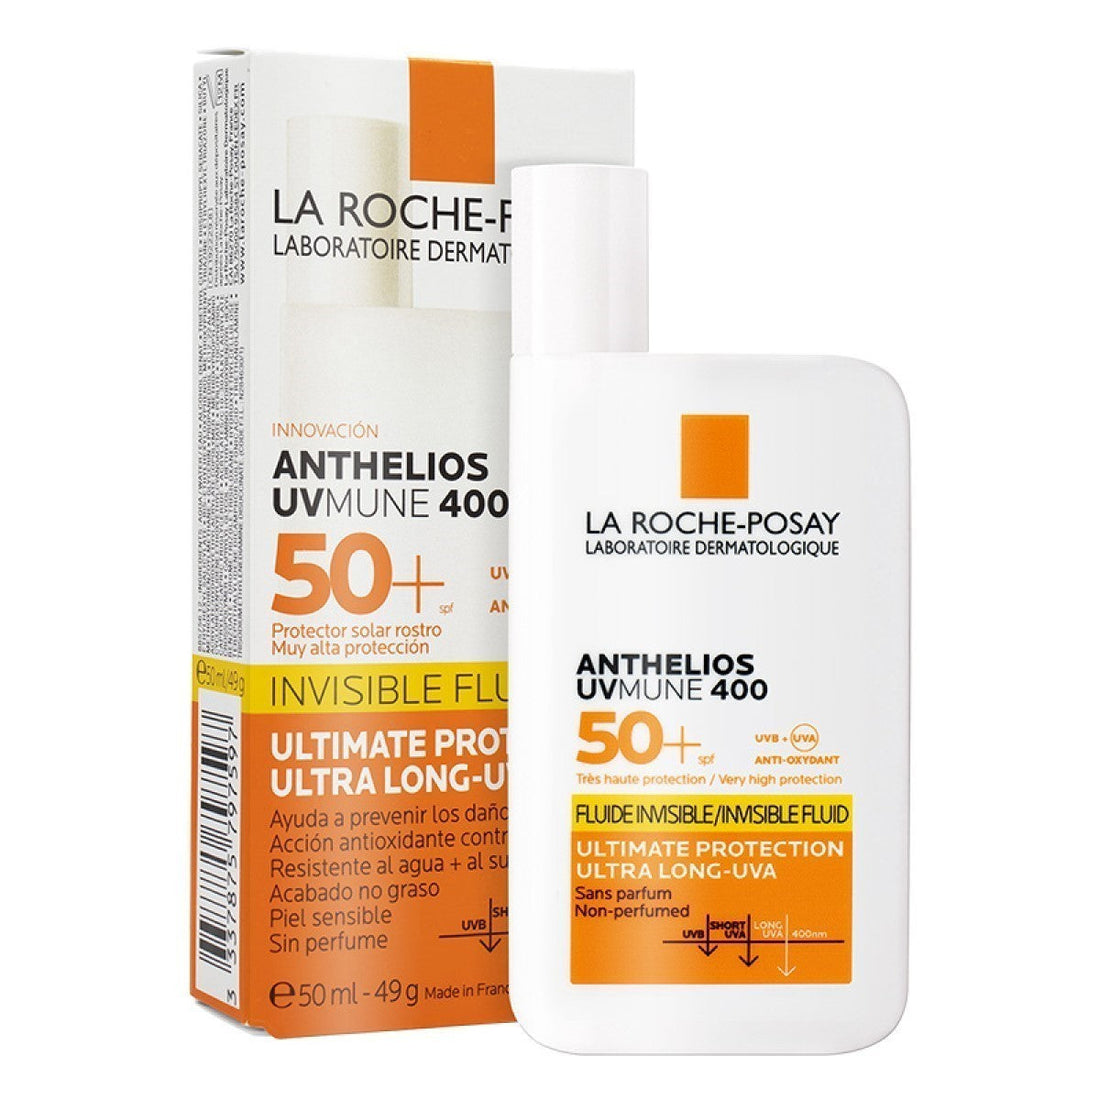 La Roche-Posay Anthelios Uvmune 400 Fluid Factor 50+ 50ml